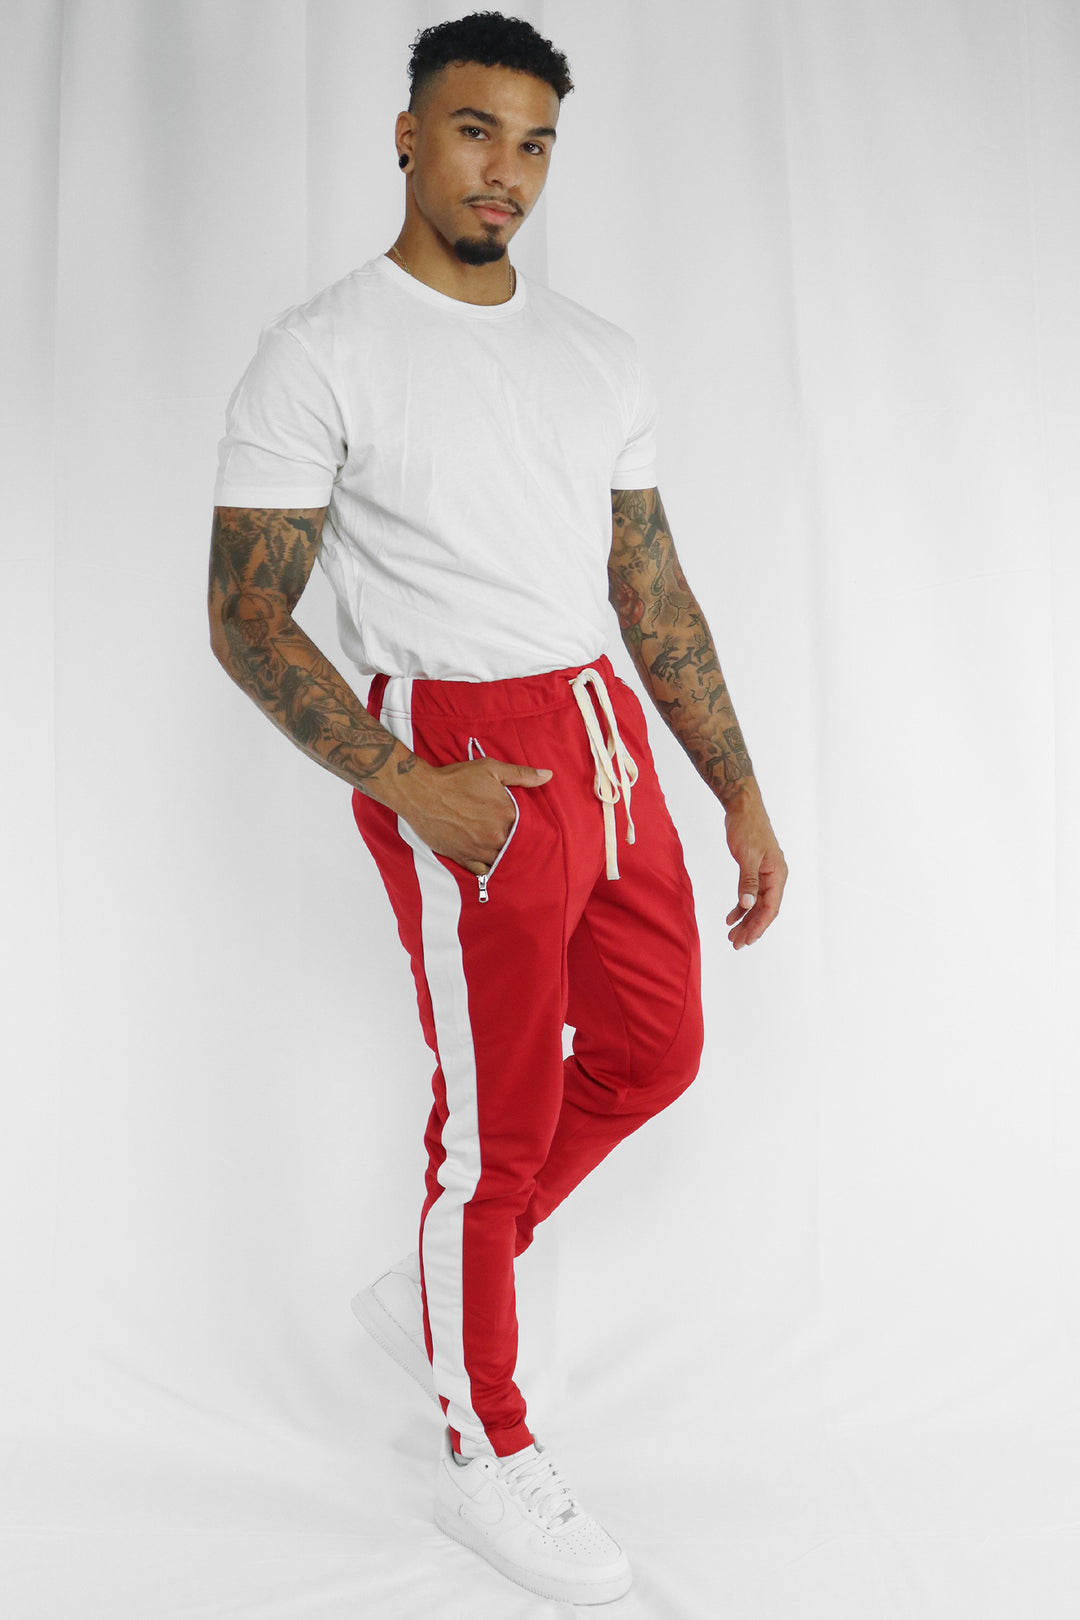 Premium Side Stripe Zip Pocket Track Pants (Red-White) - Zamage